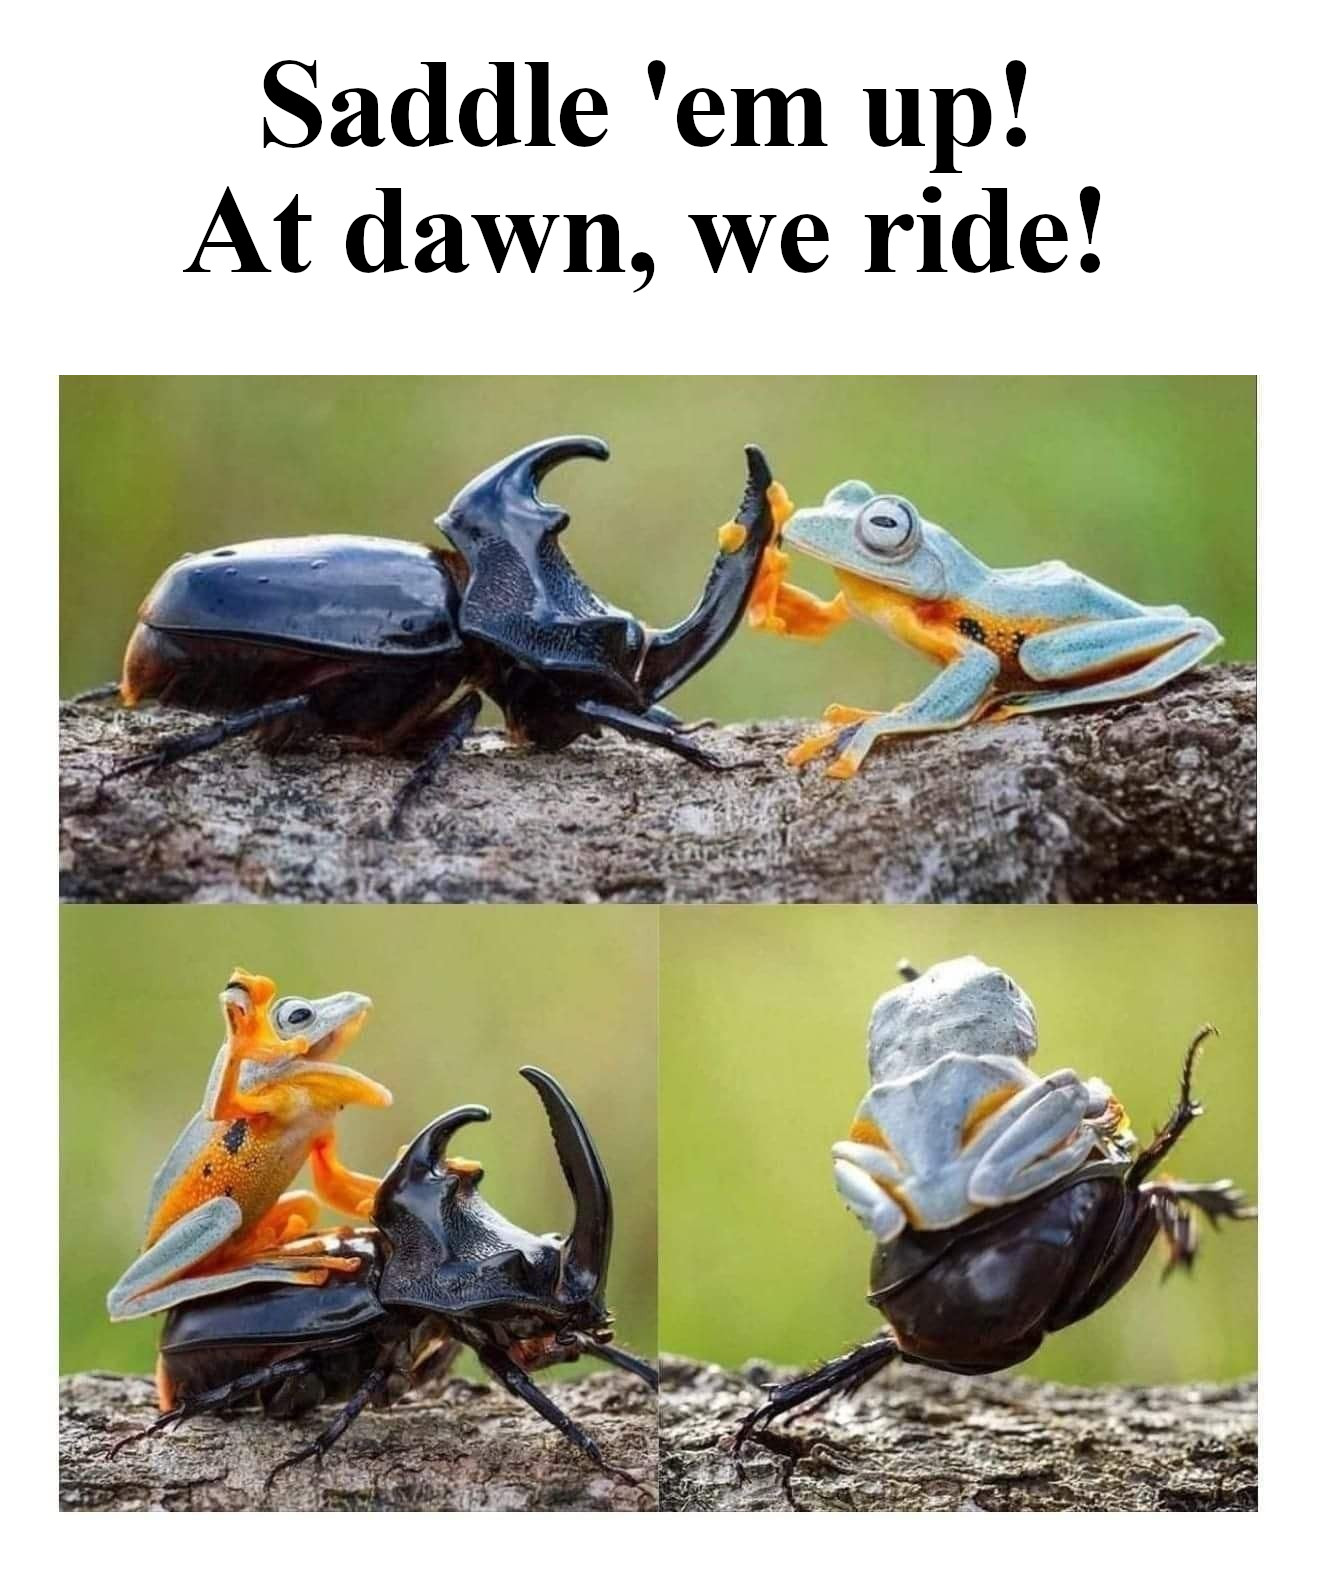 fauna - Saddle 'em up! At dawn, we ride!